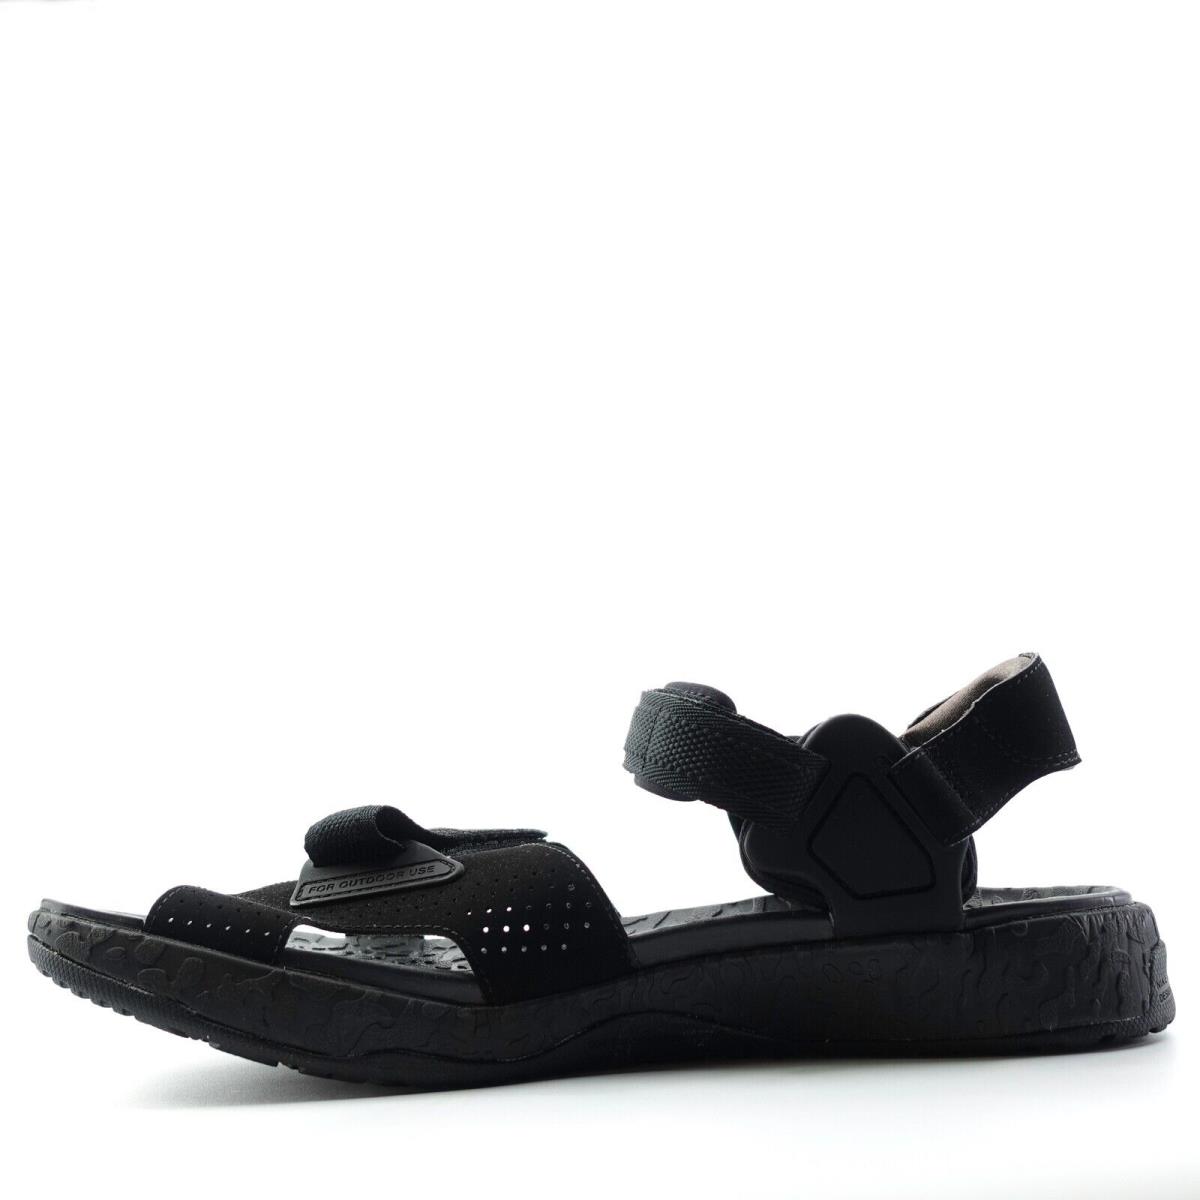 Nike Acg Air Deschutz Black Sandals Slipper Slide Strap DC9093-001 Men 14